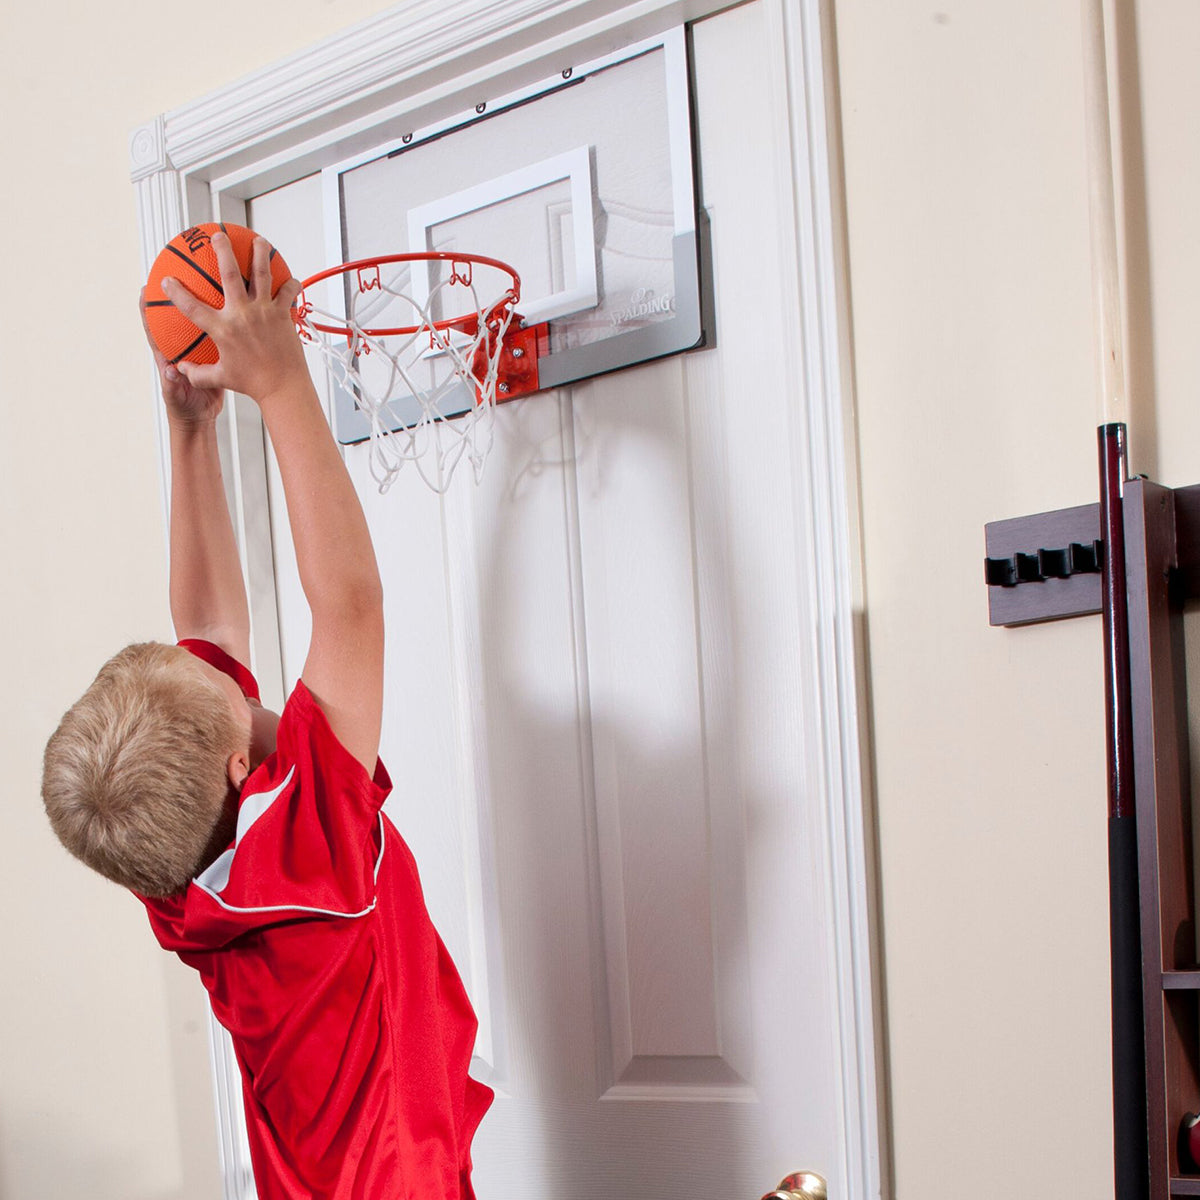 Spalding Slam Jam Over-The-Door Mini Basketball Hoop - Clear Spalding